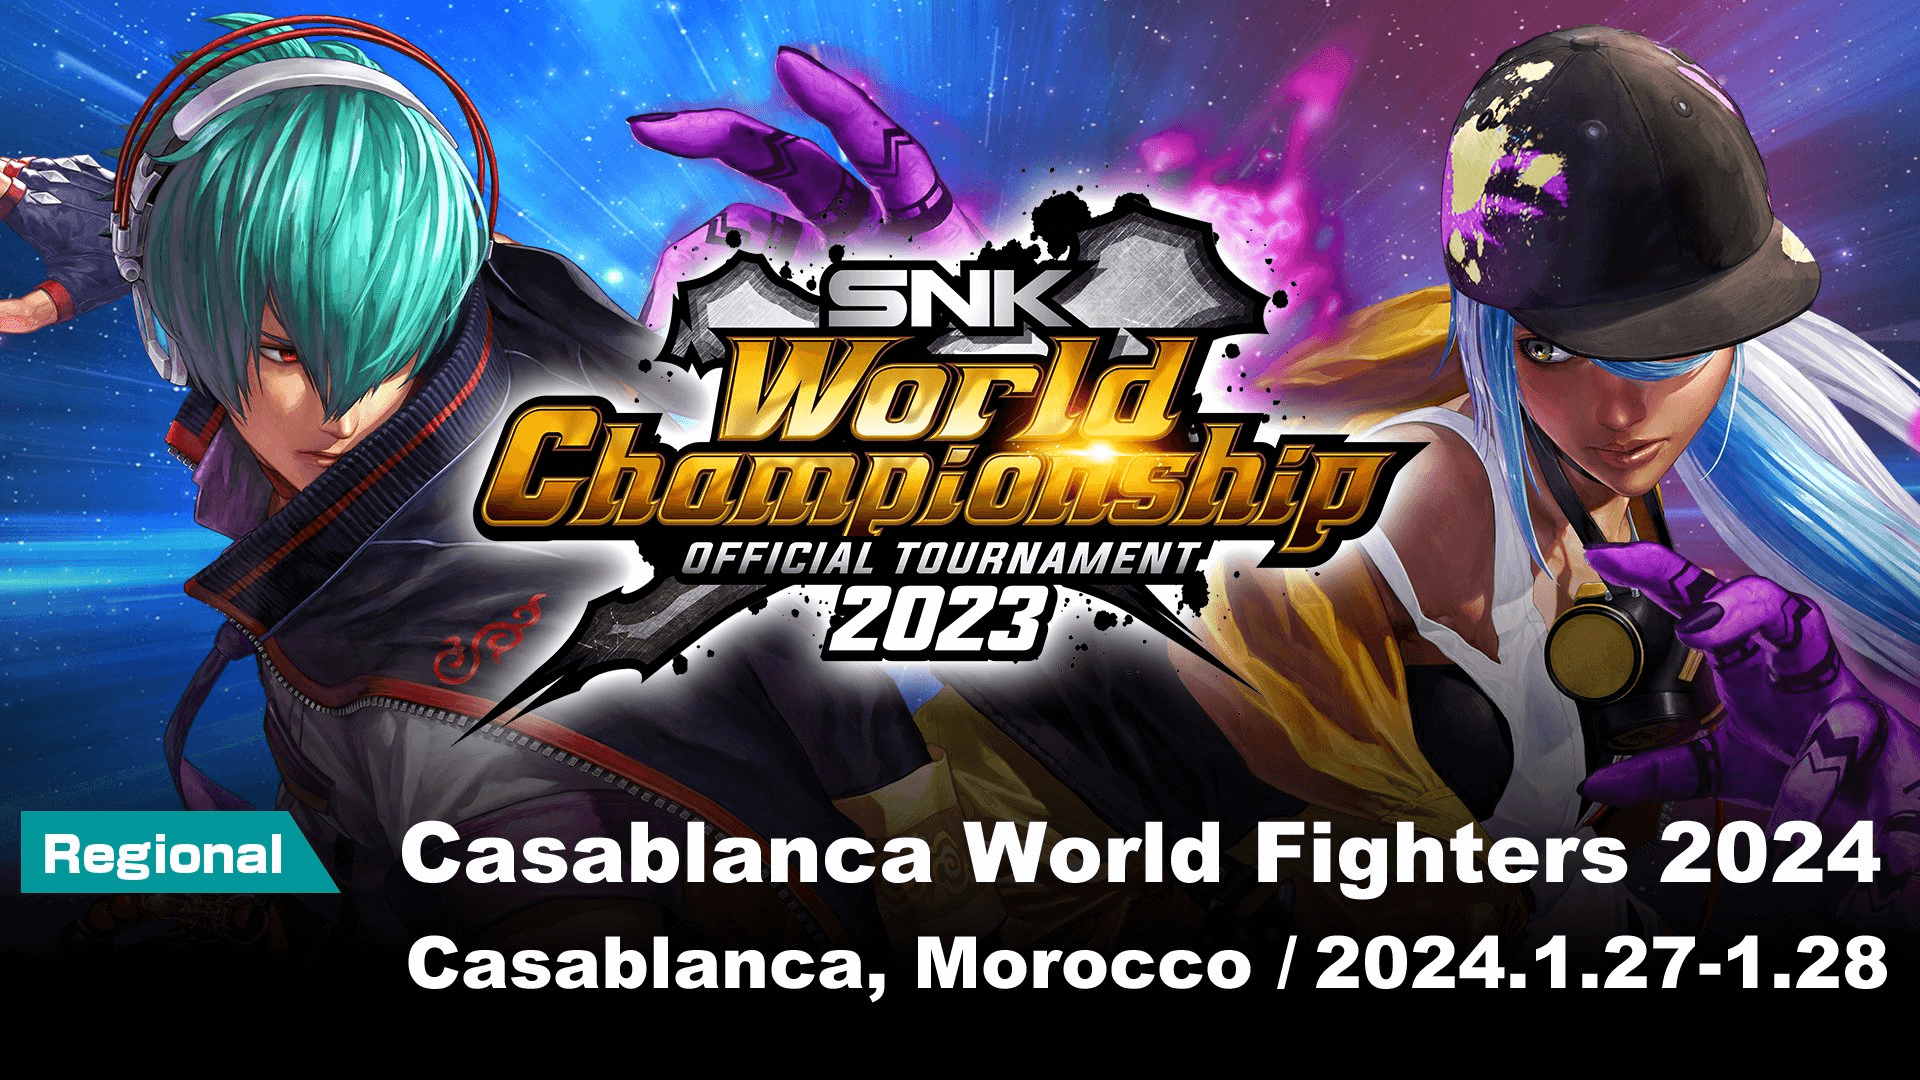 Casablanca World Fighters 2024 Announced as SWC's EMEA's Qualifier